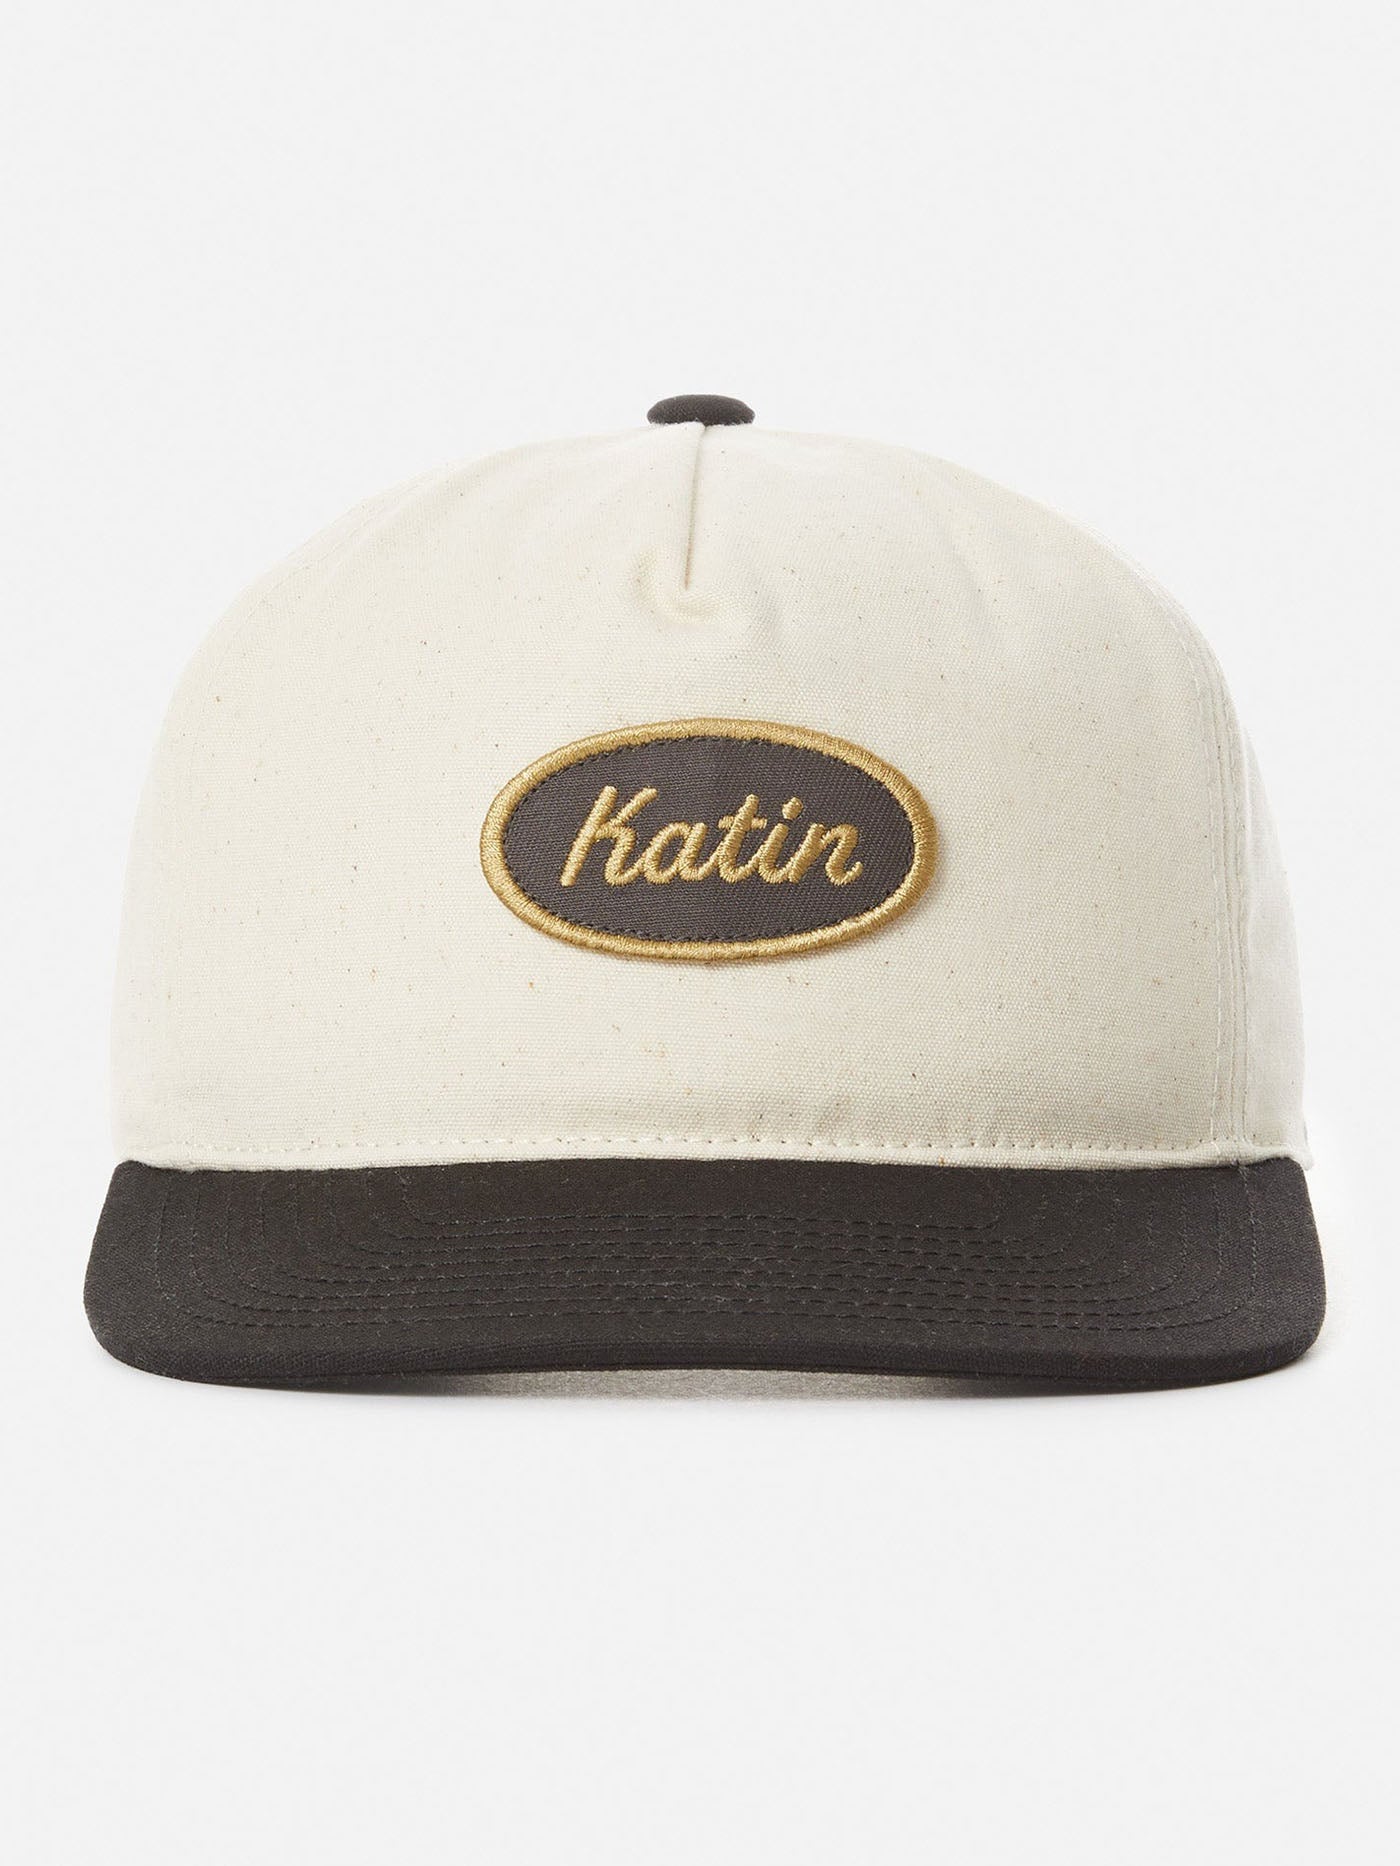 Katin Roadside Hat